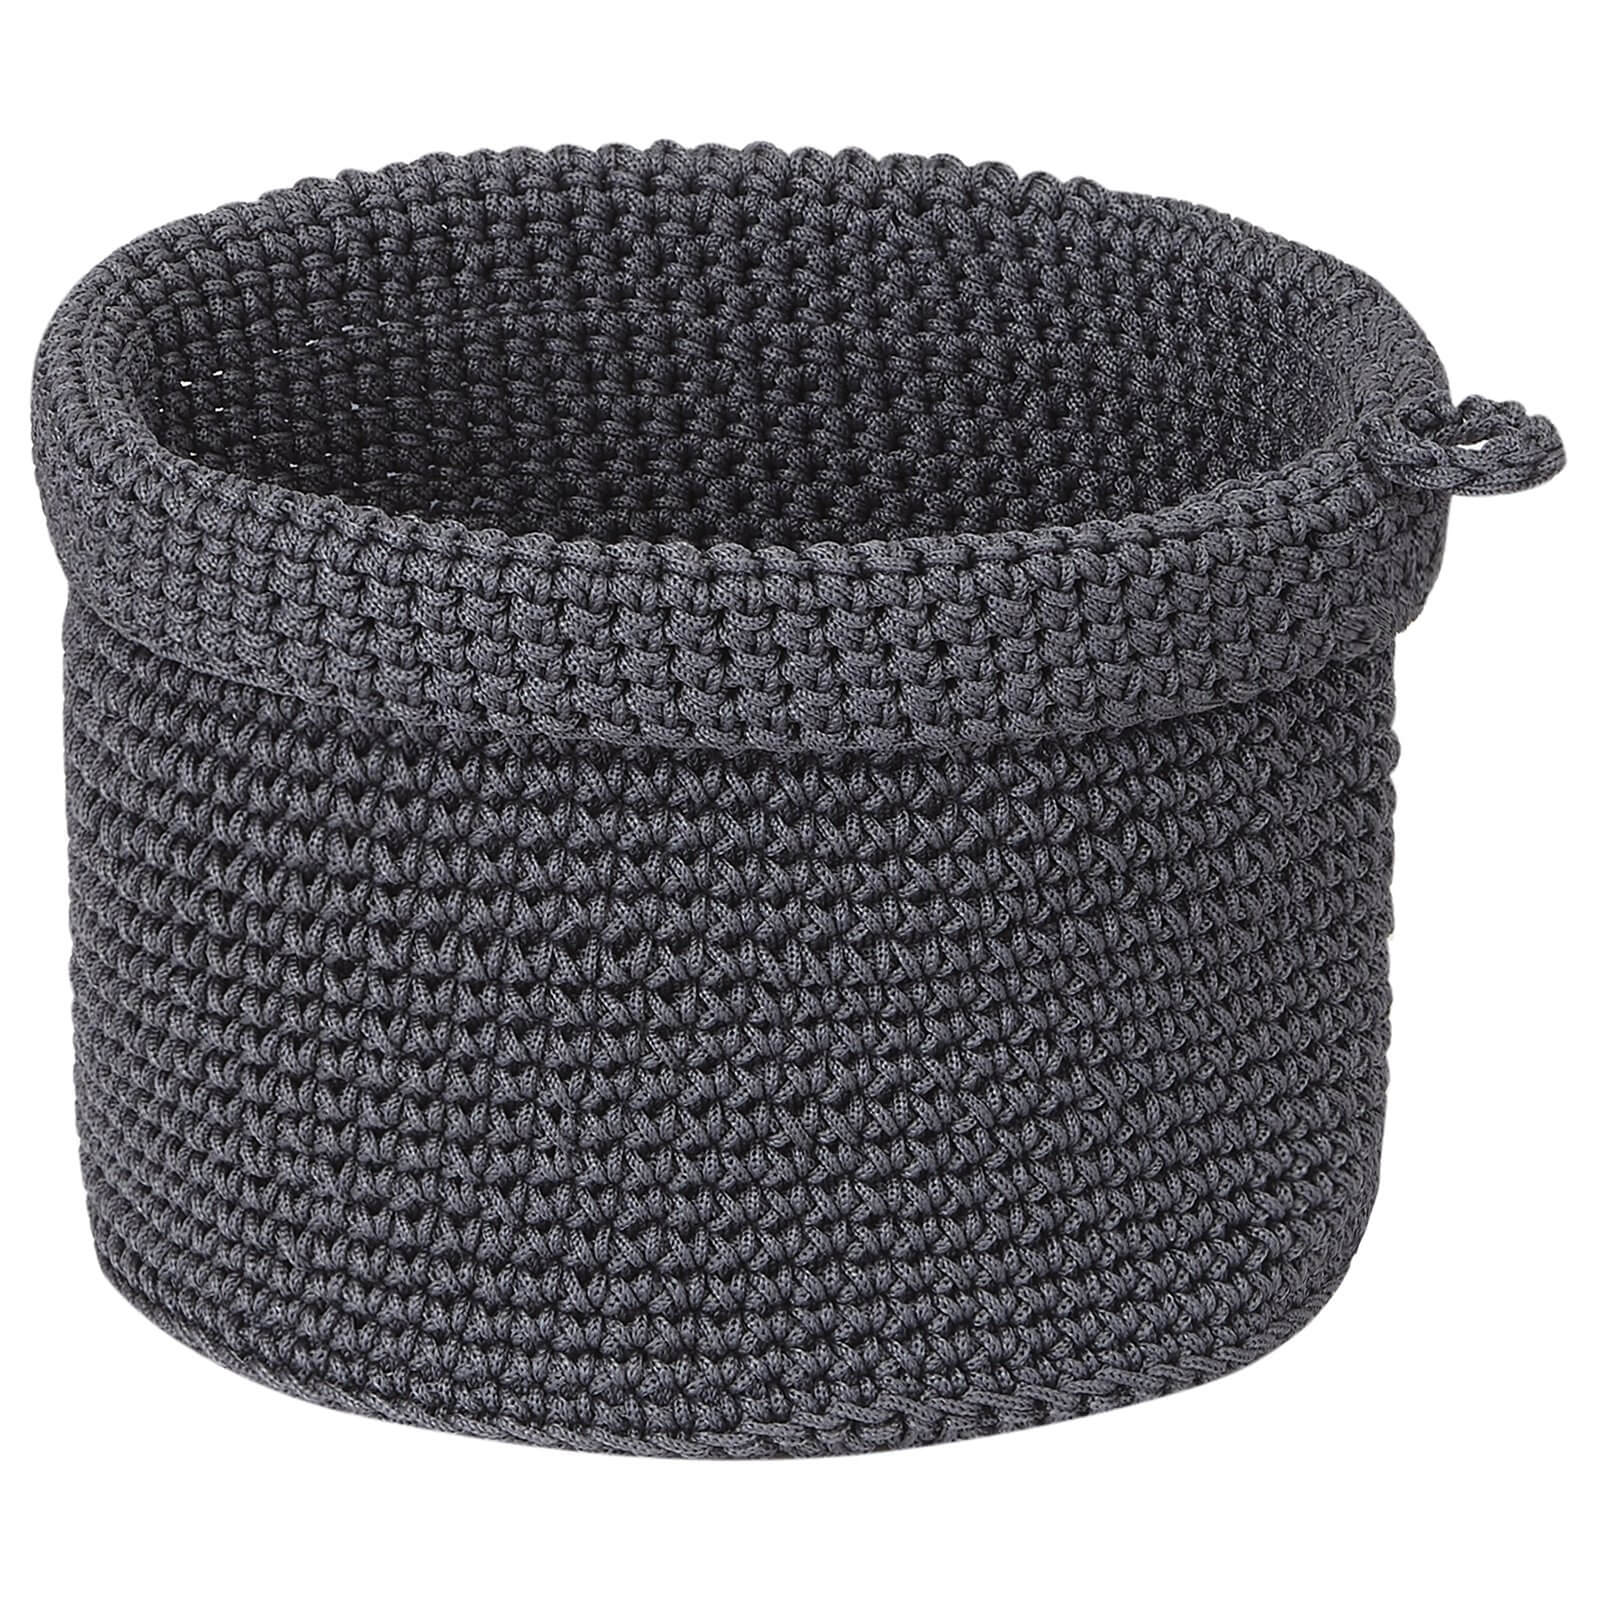 Knitted Storage Basket - Grey